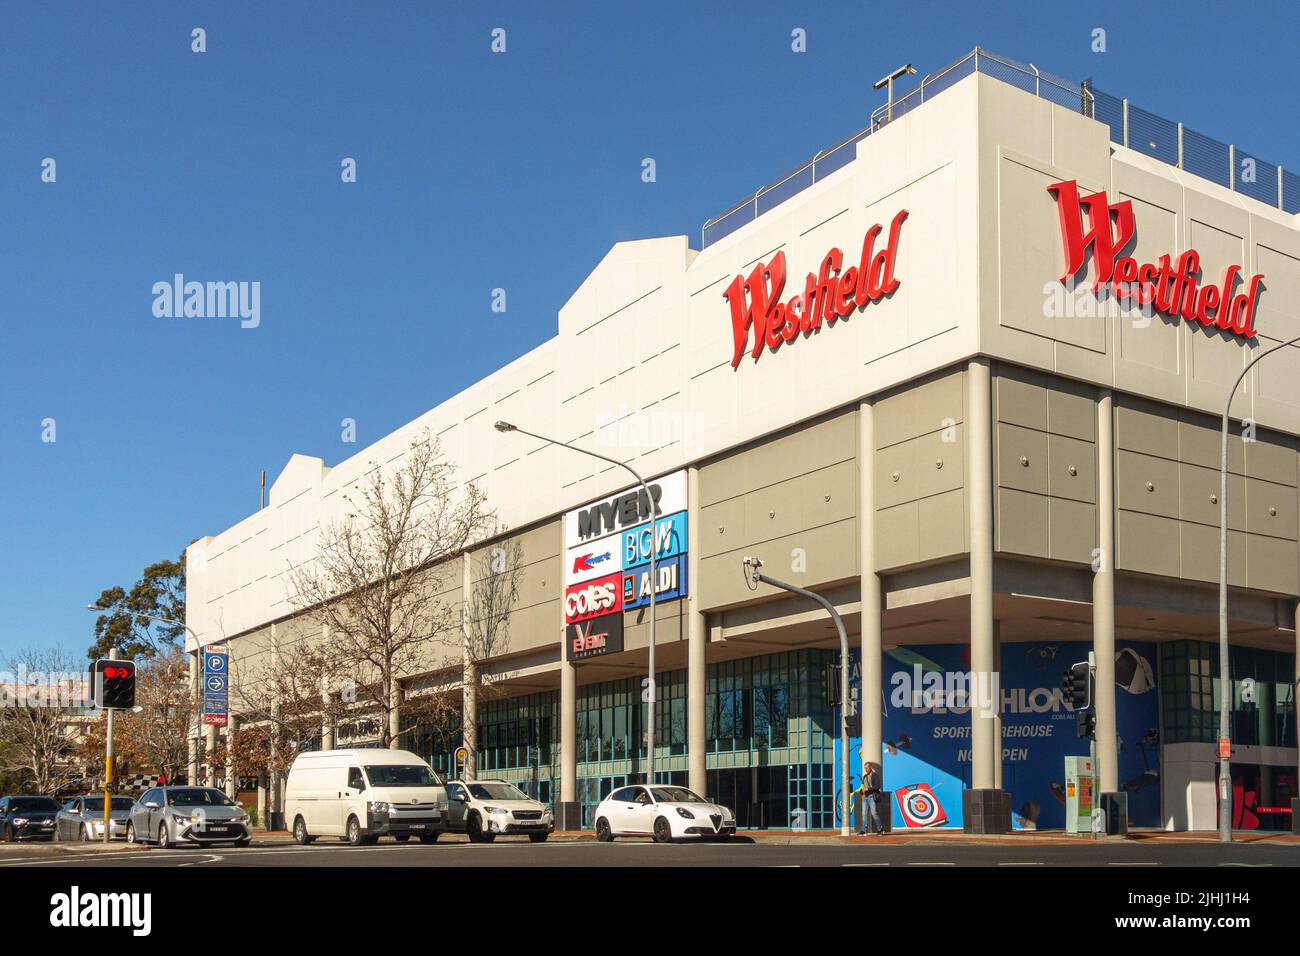 The facade of the Westfield Miranda shopping mall Stock Photo